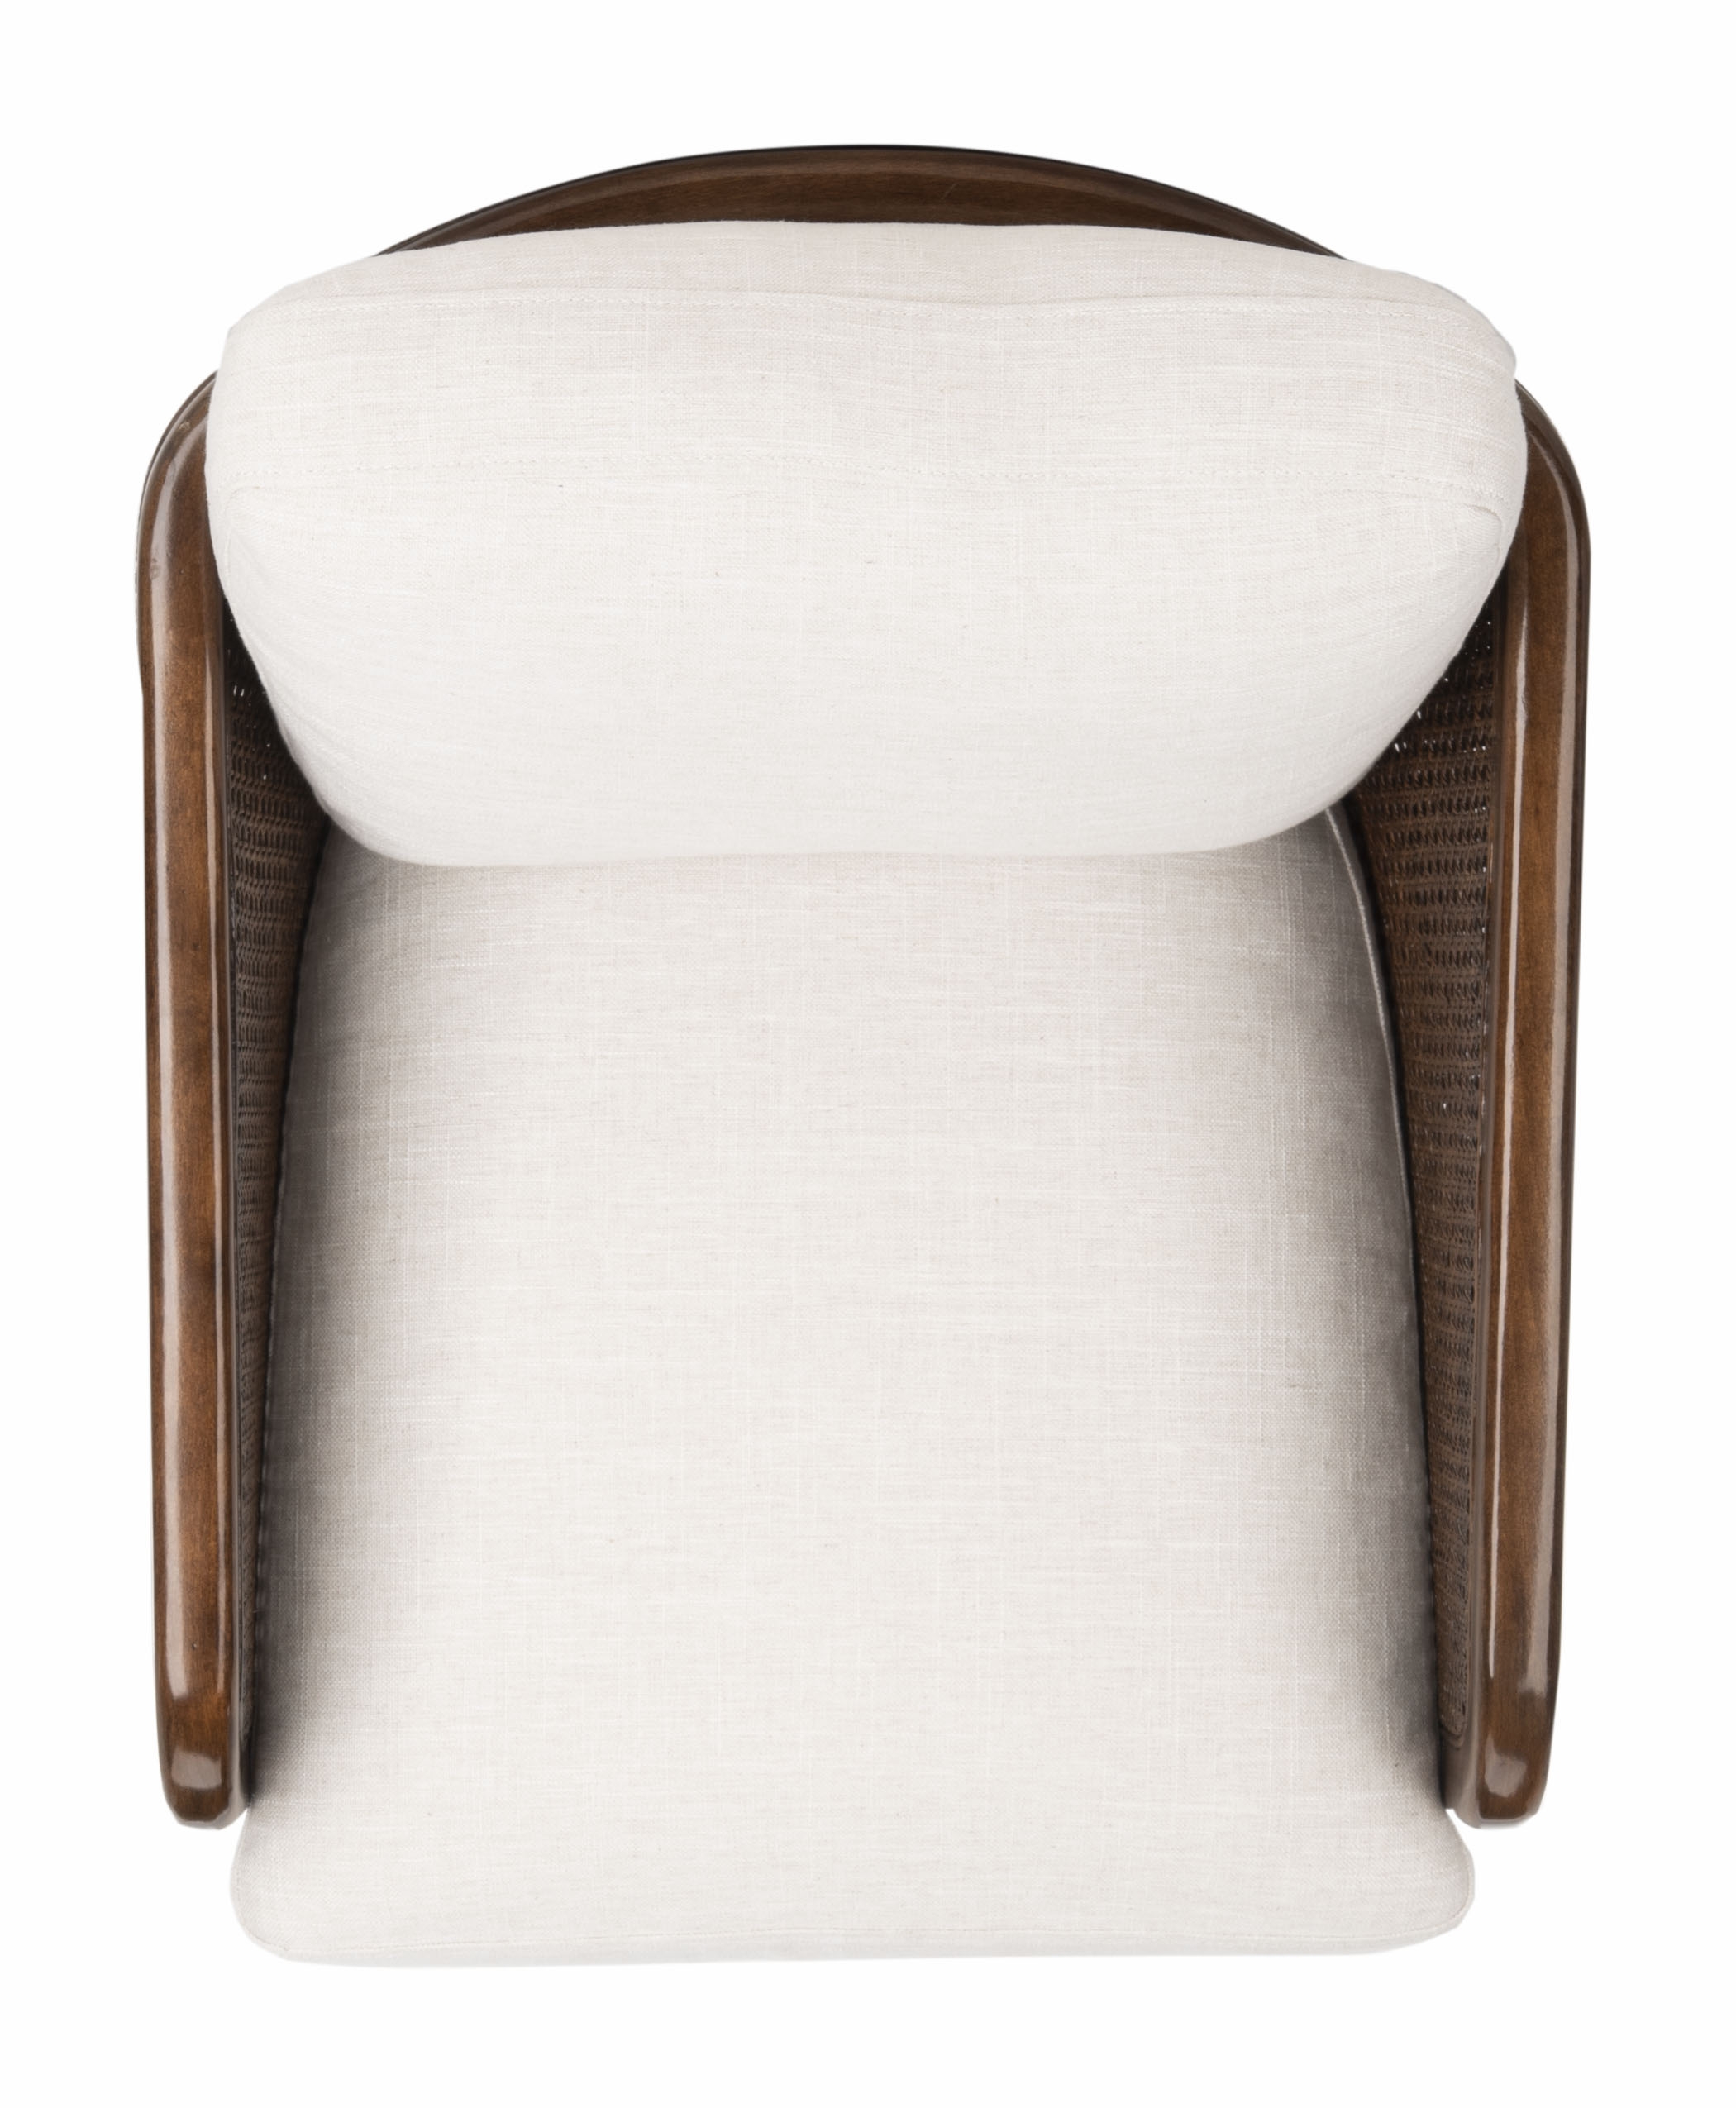 Caruso Barrel Back Chair - Oatmeal - Arlo Home - Image 6